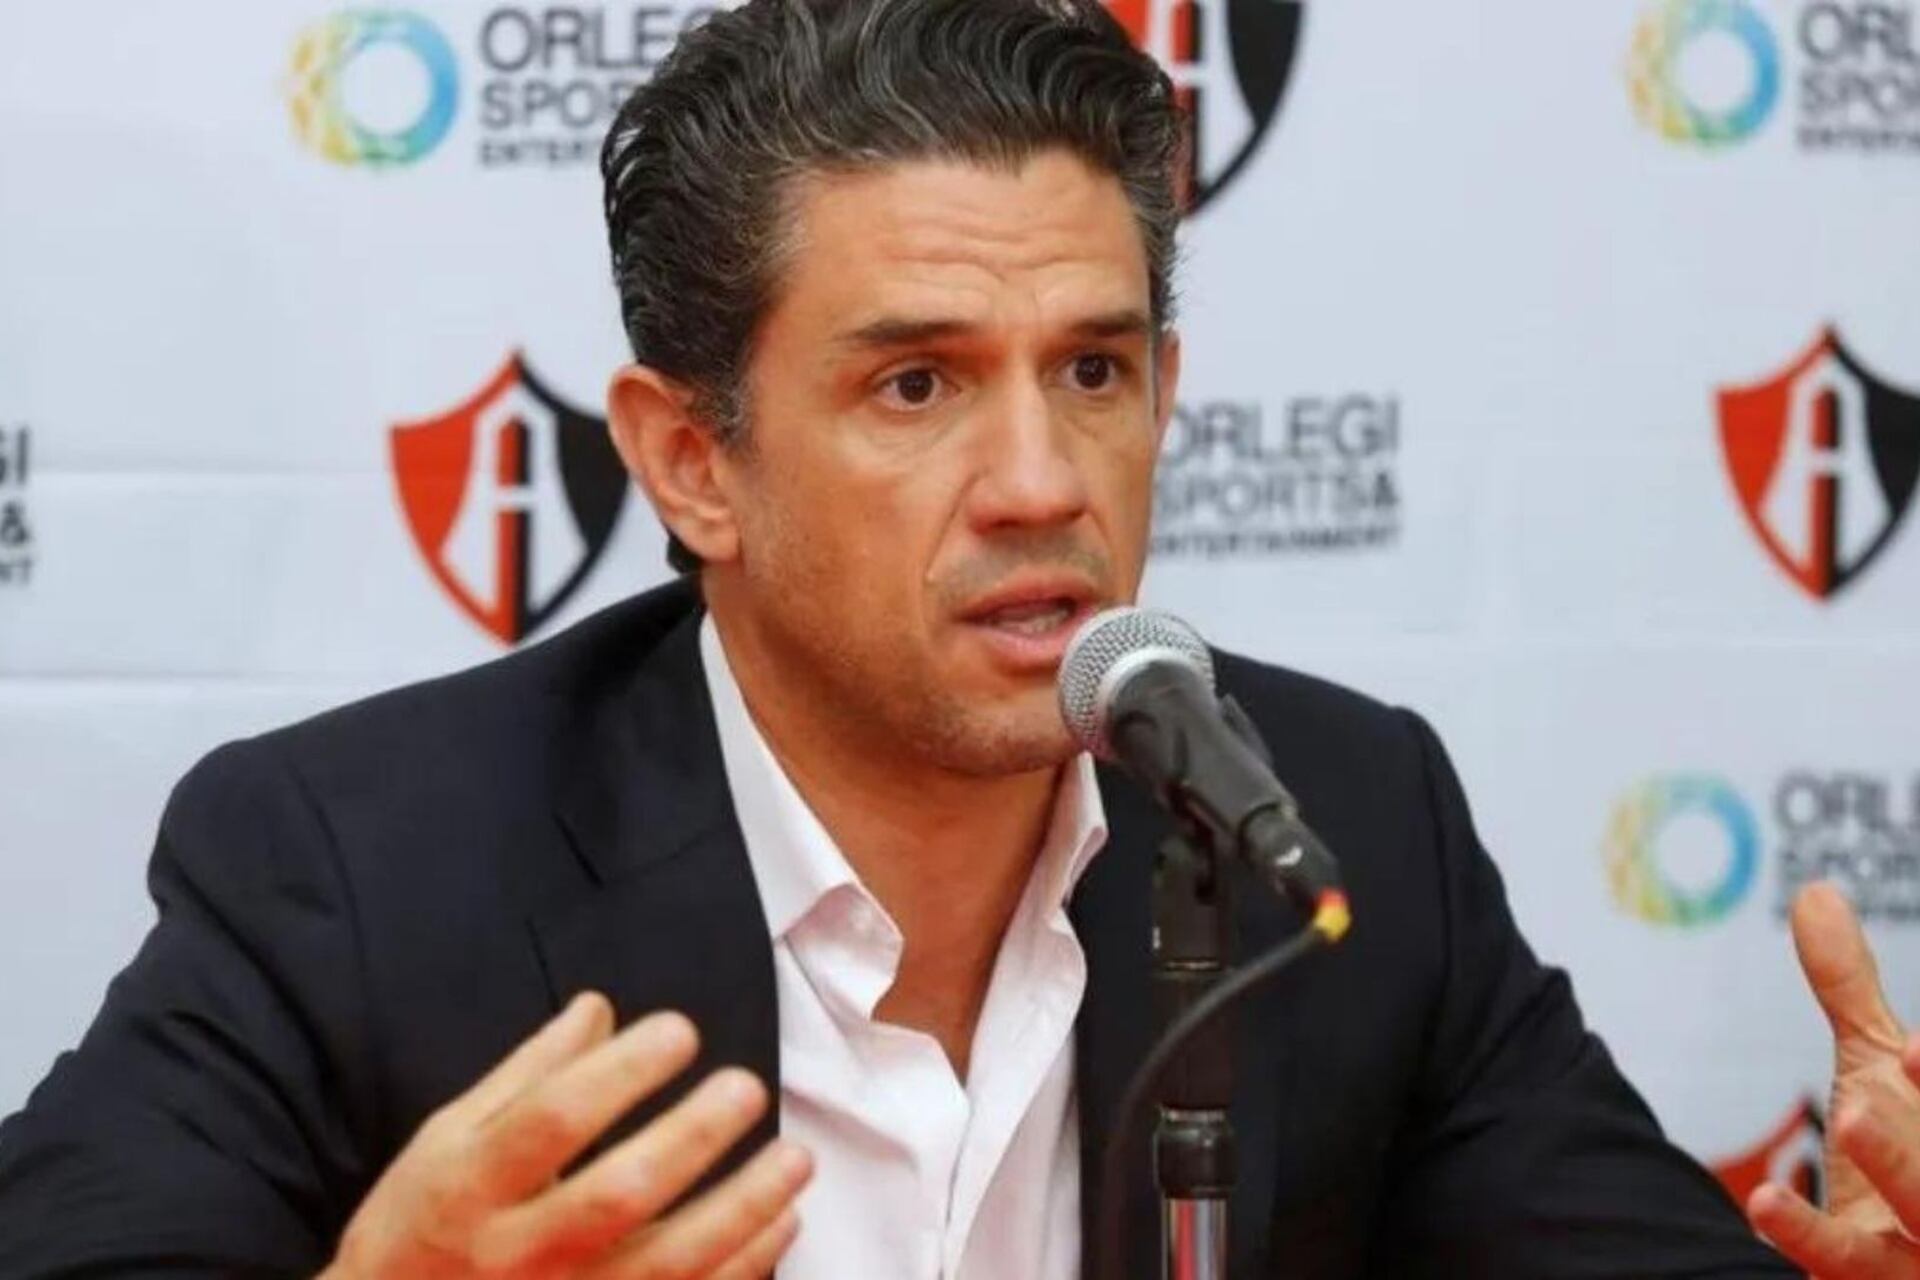 Grupo Orlegi are after their third team in Liga MX